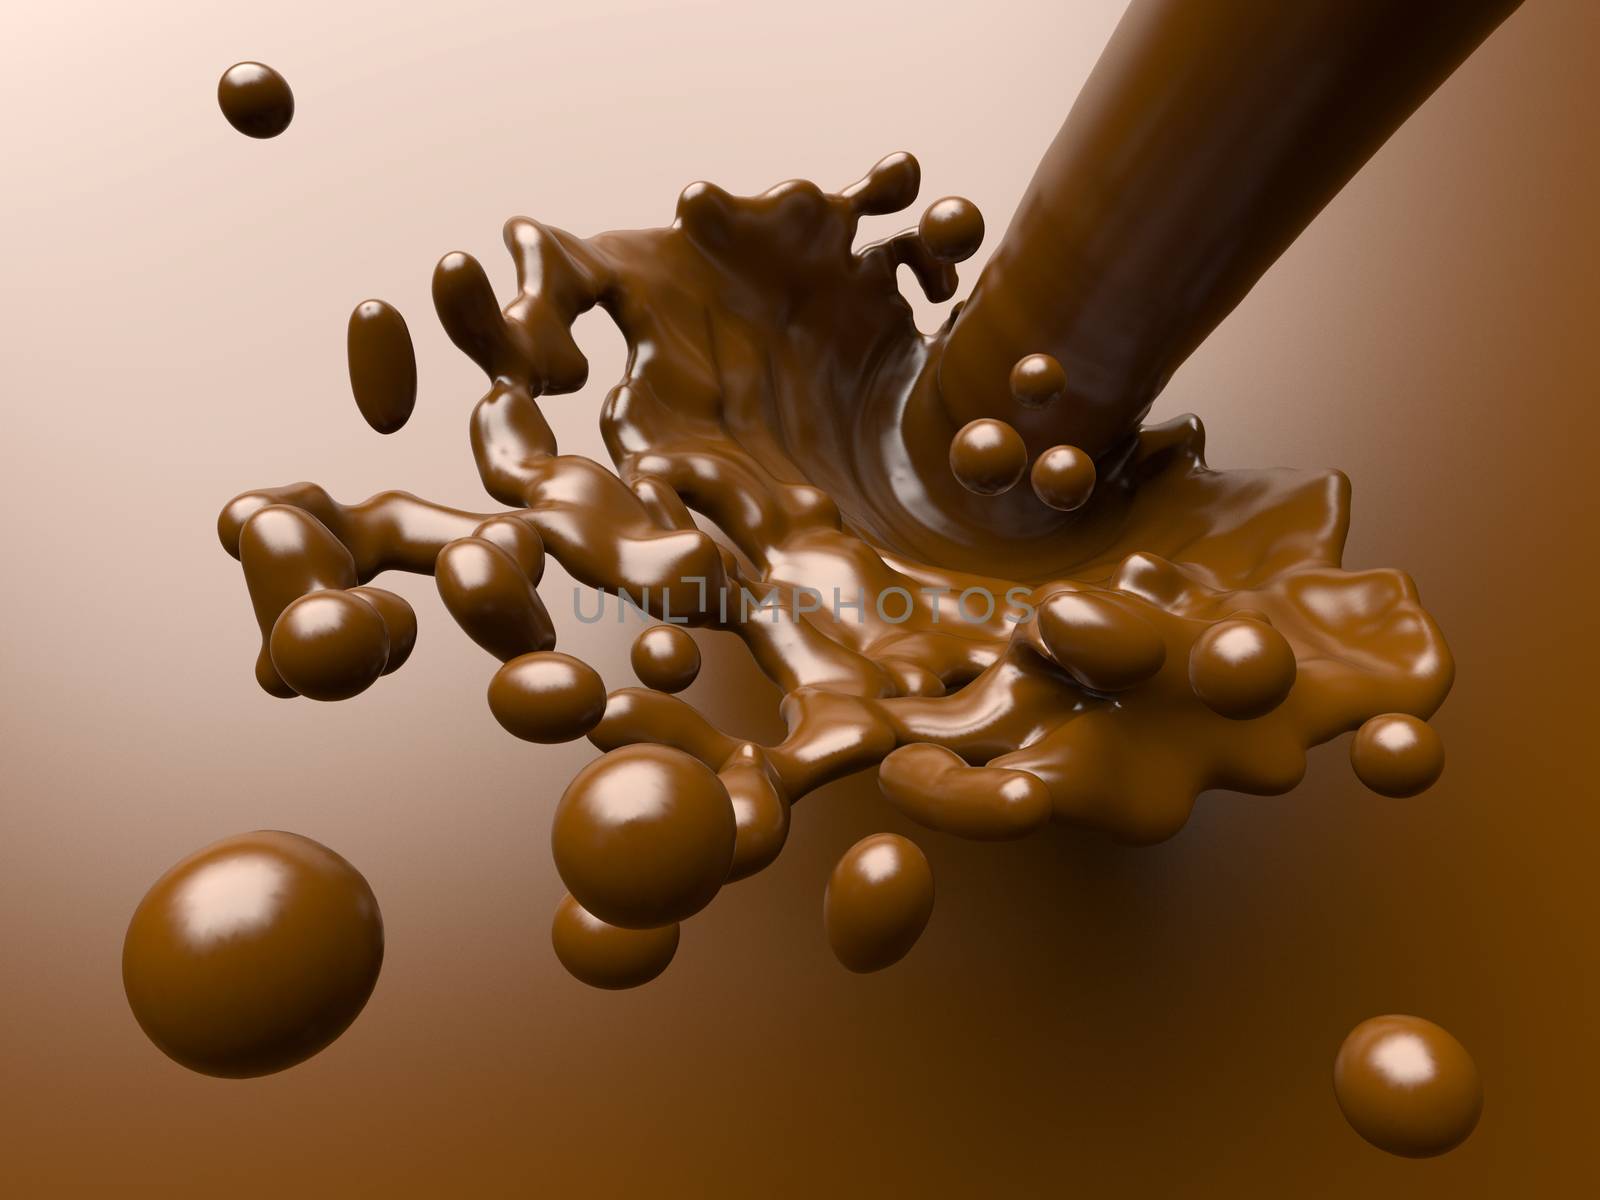 chocolate splash by gallofoto